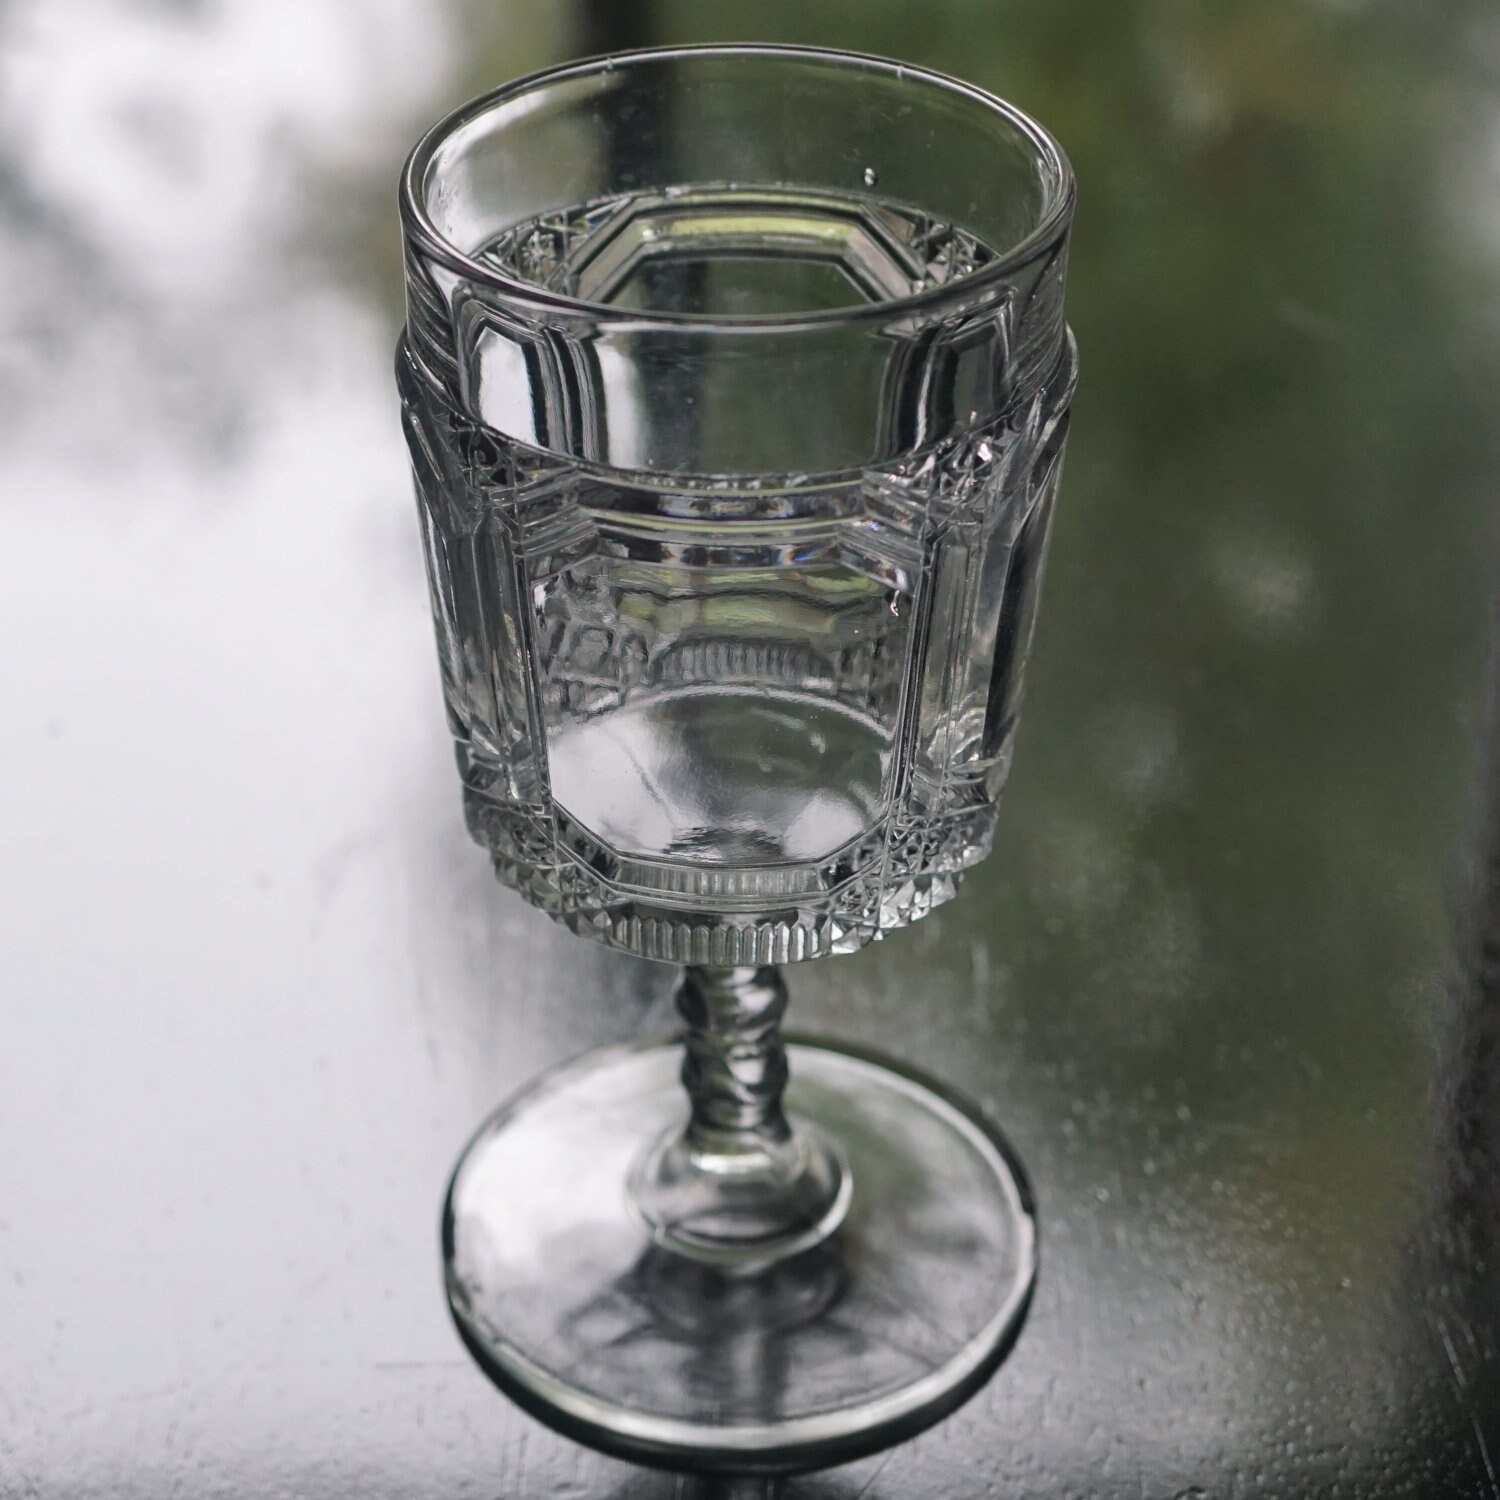 Windsor Wine Glass - Set of 6 – Farmhouse Pottery